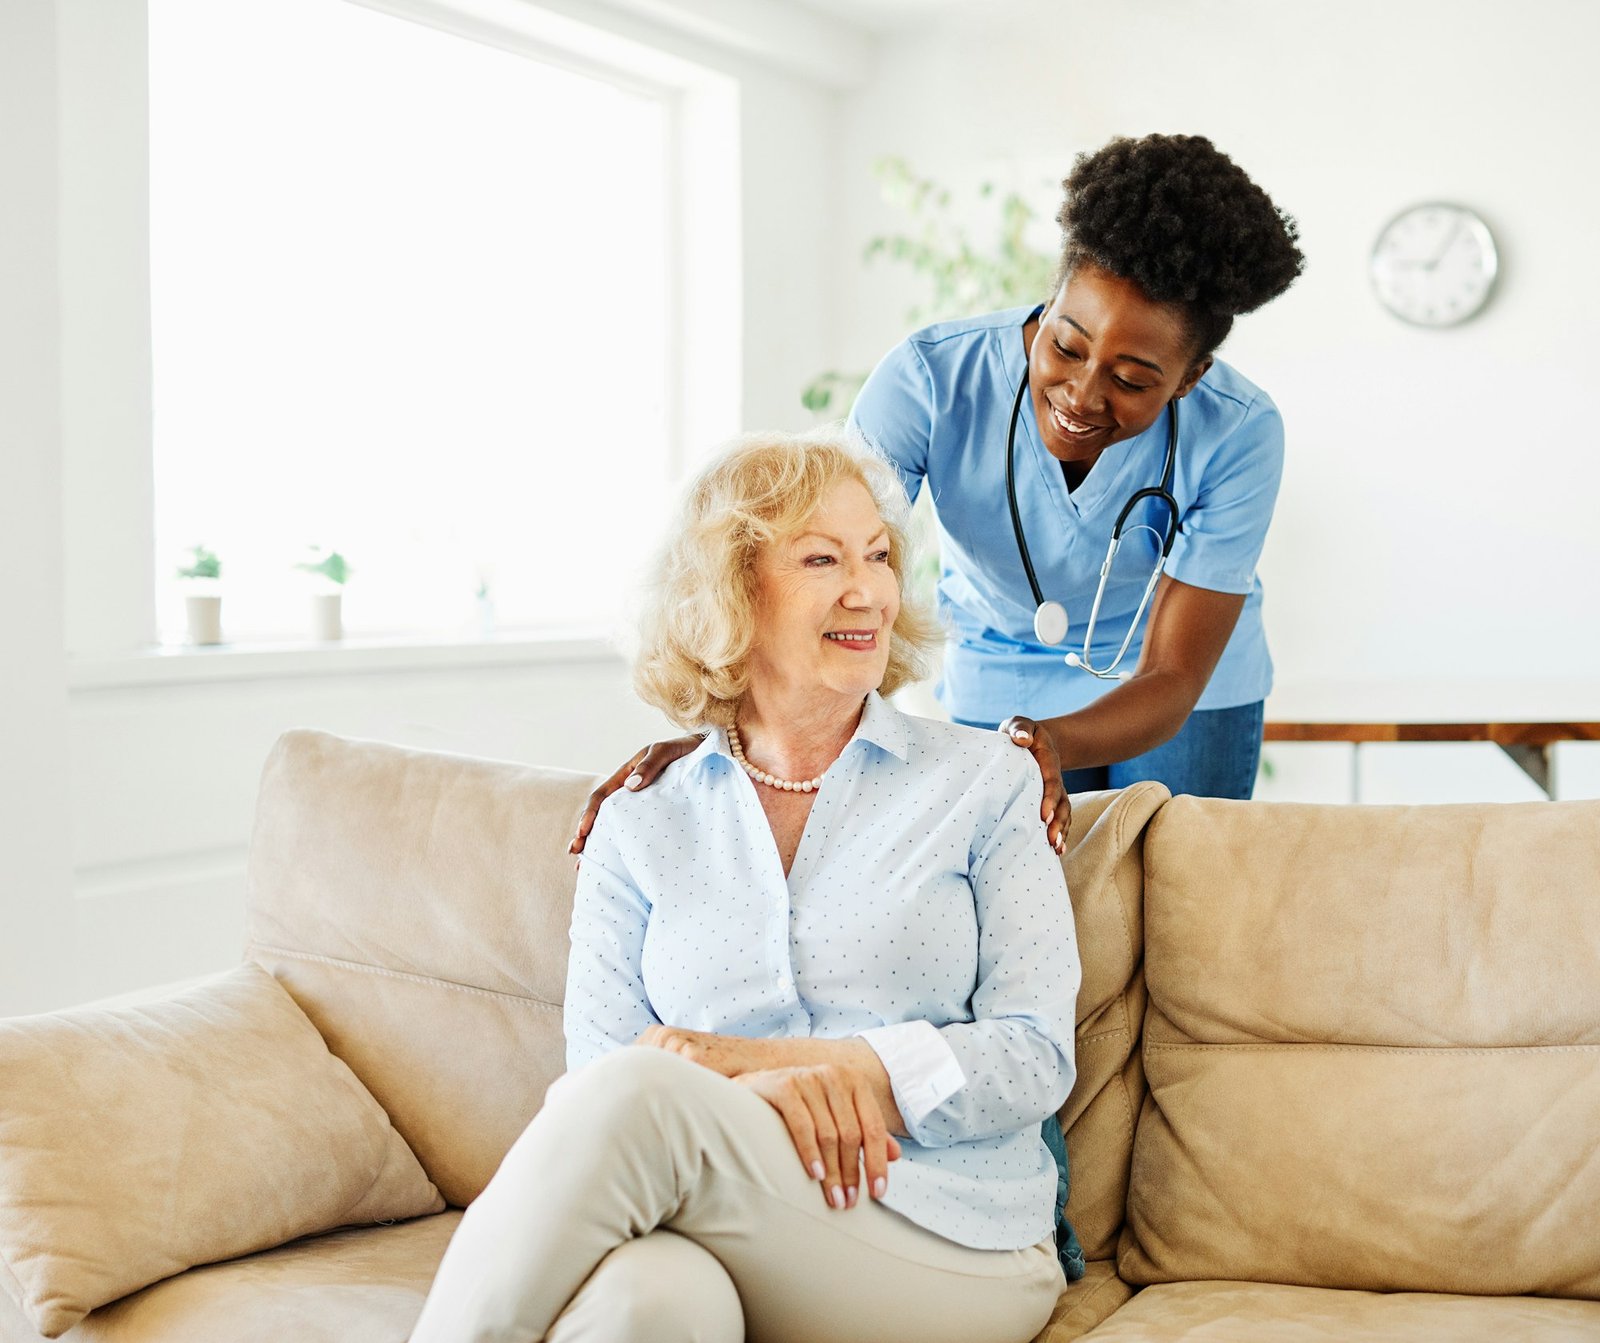 nurse doctor senior care caregiver help assistence retirement home nursing elderly woman health